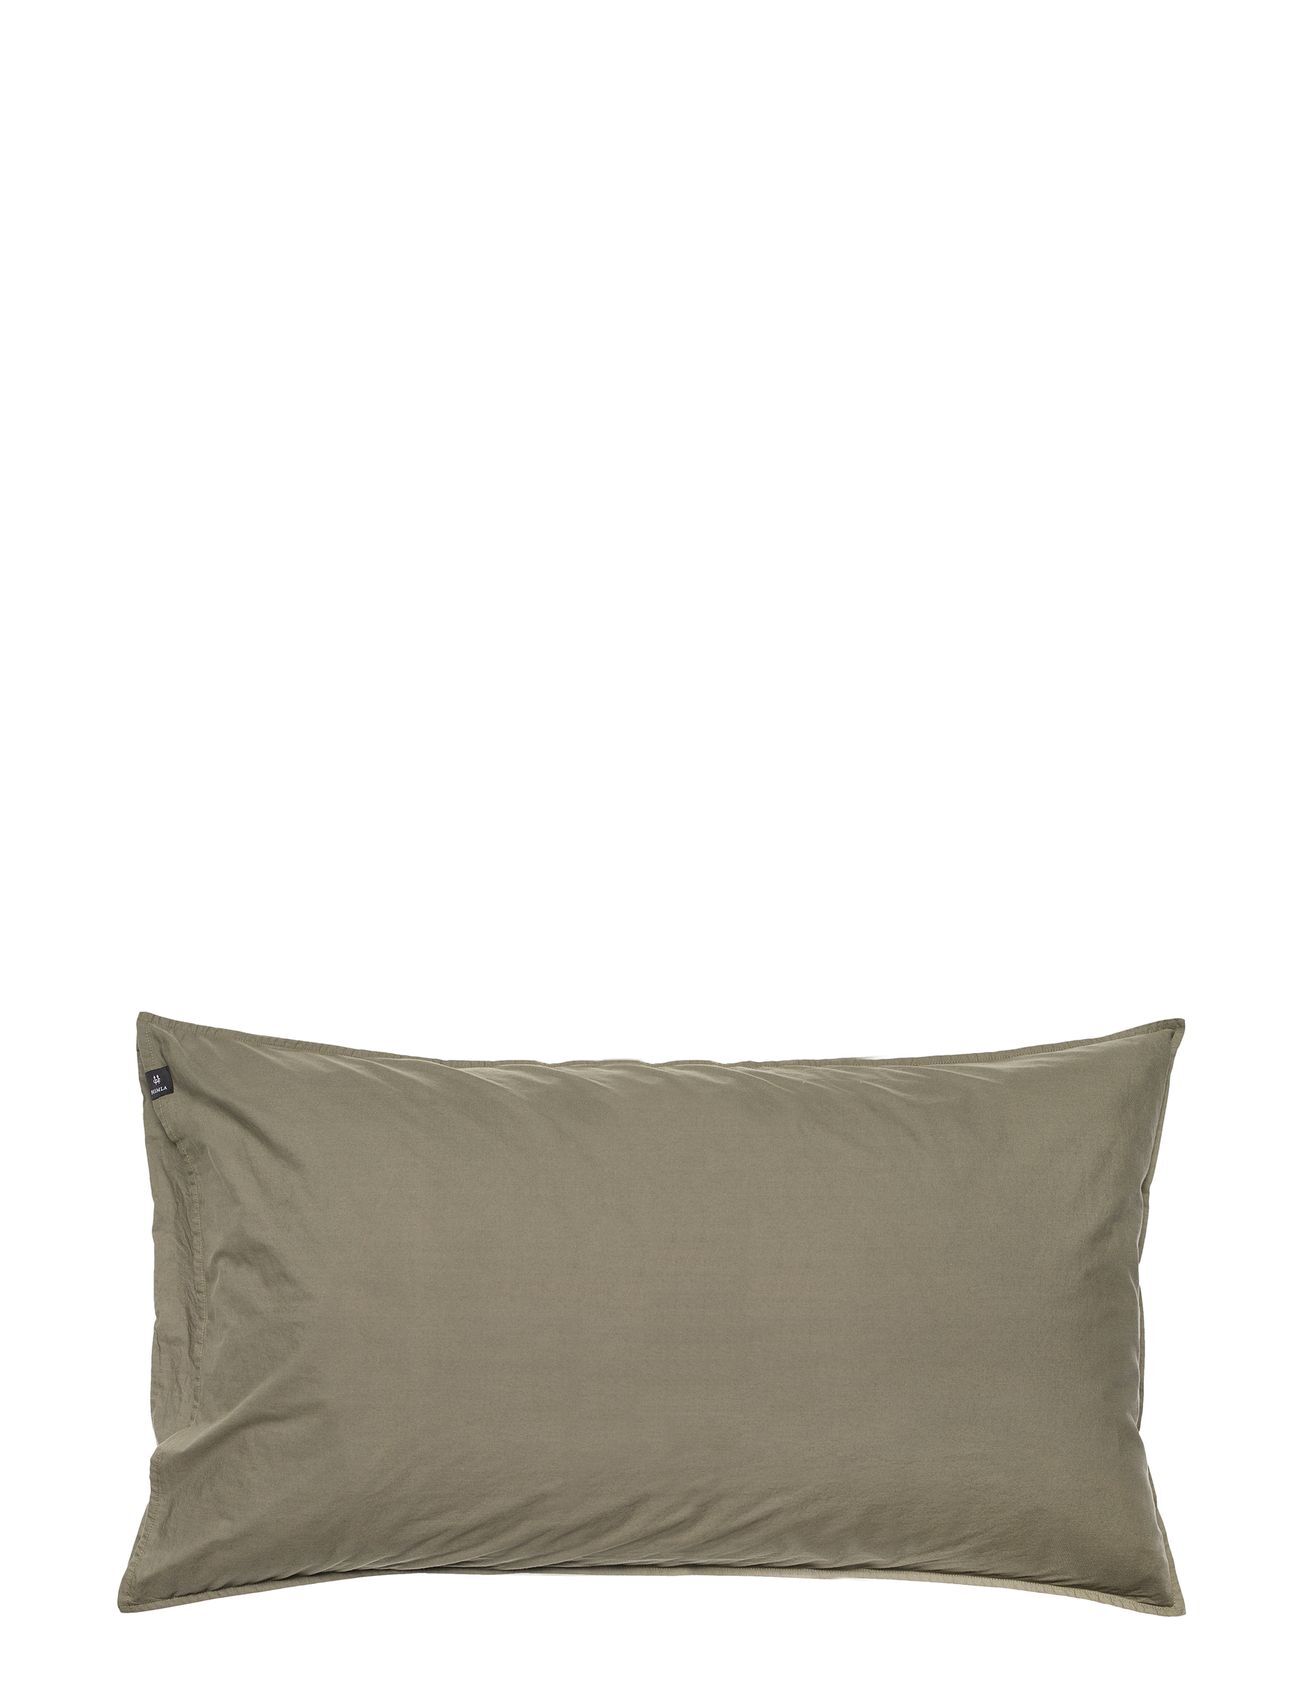 Himla Hope Plain Pillowcase Home Textiles Bedtextiles Pillow Cases Grønn Himla